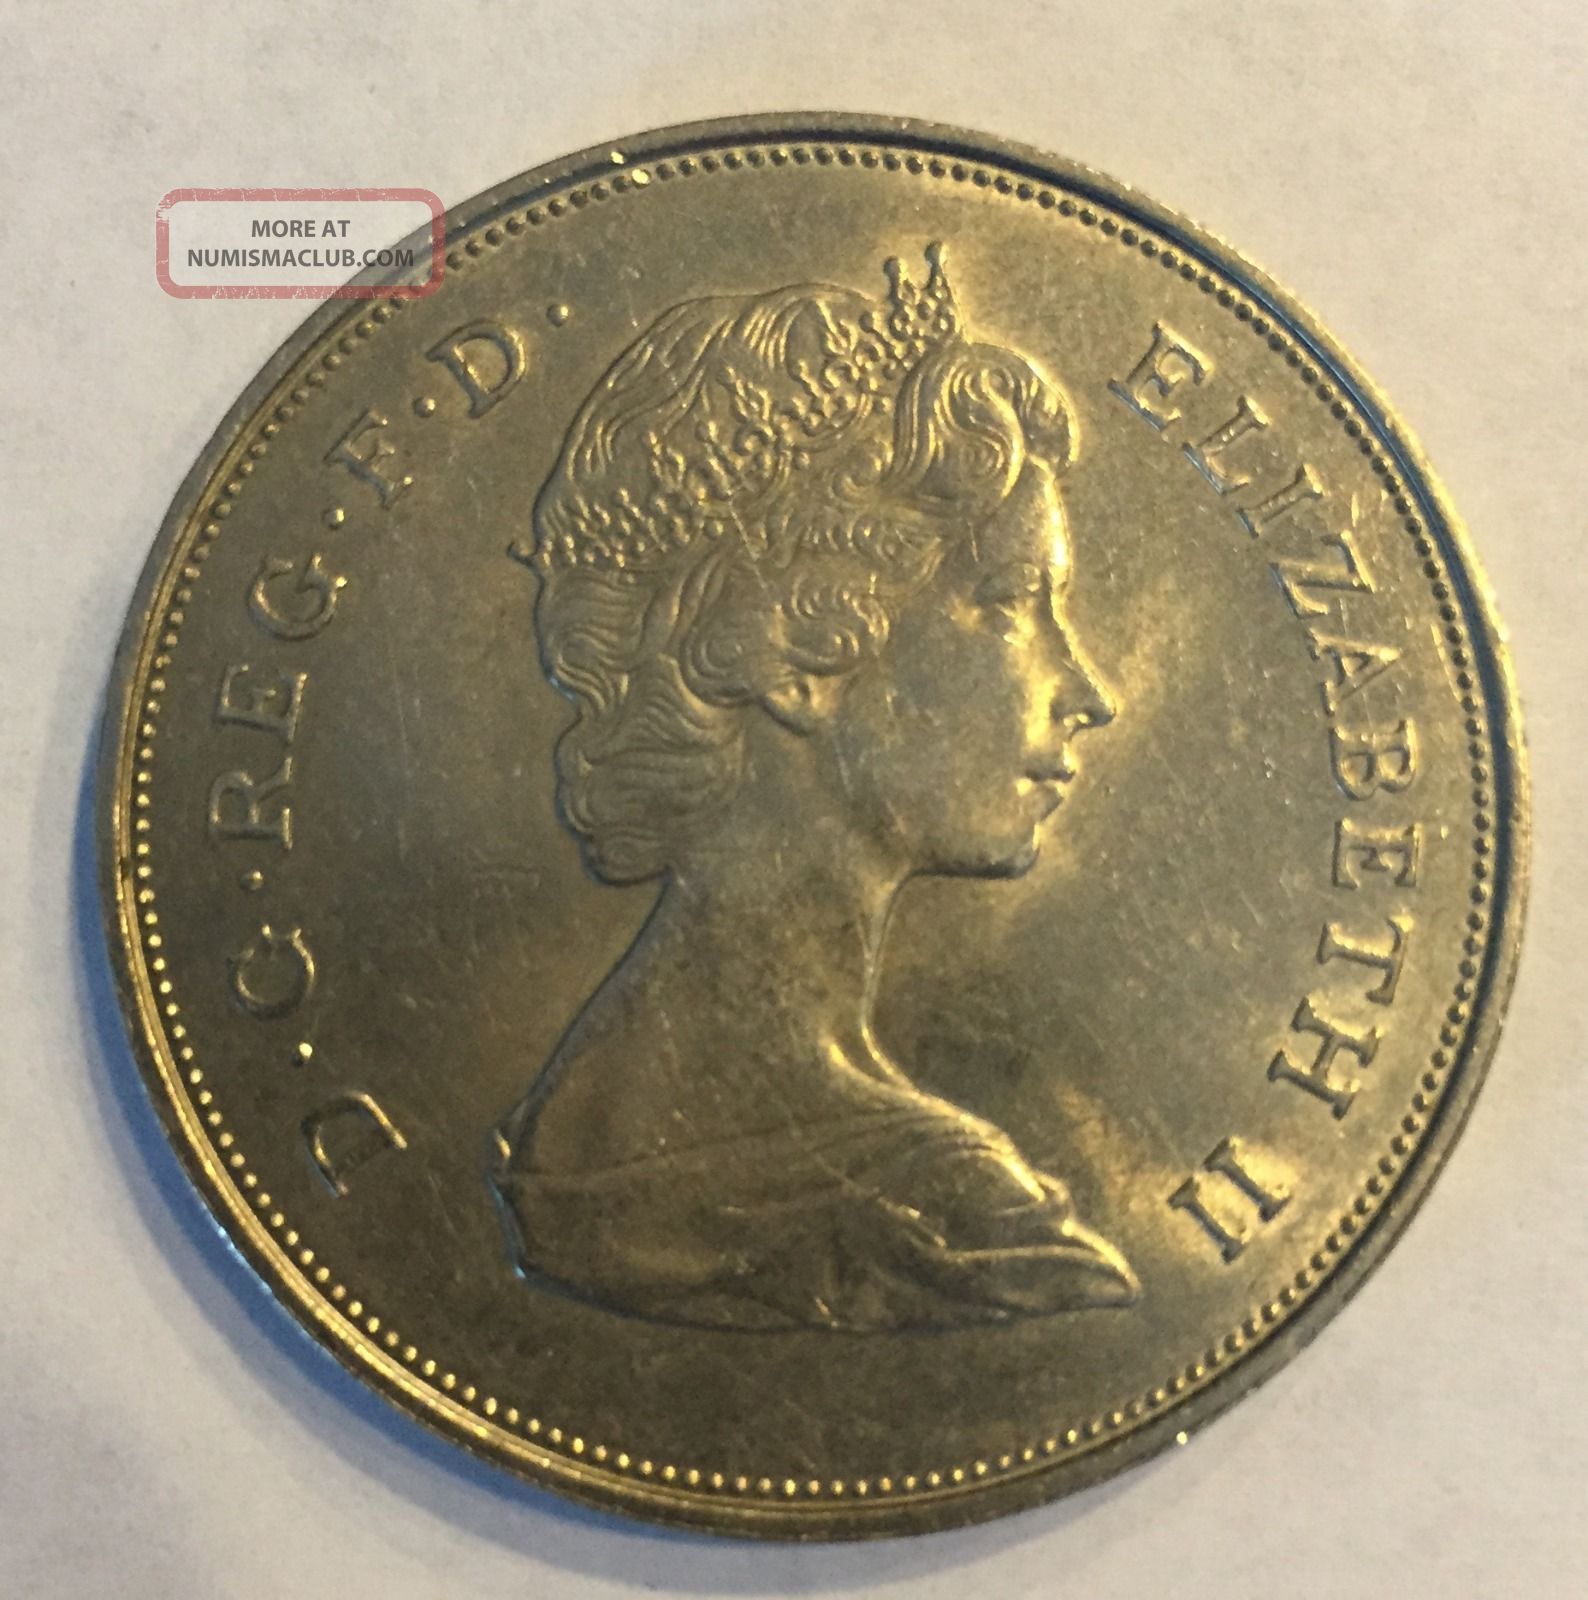 1981 The Prince Of Wales Coin | peiauto.com